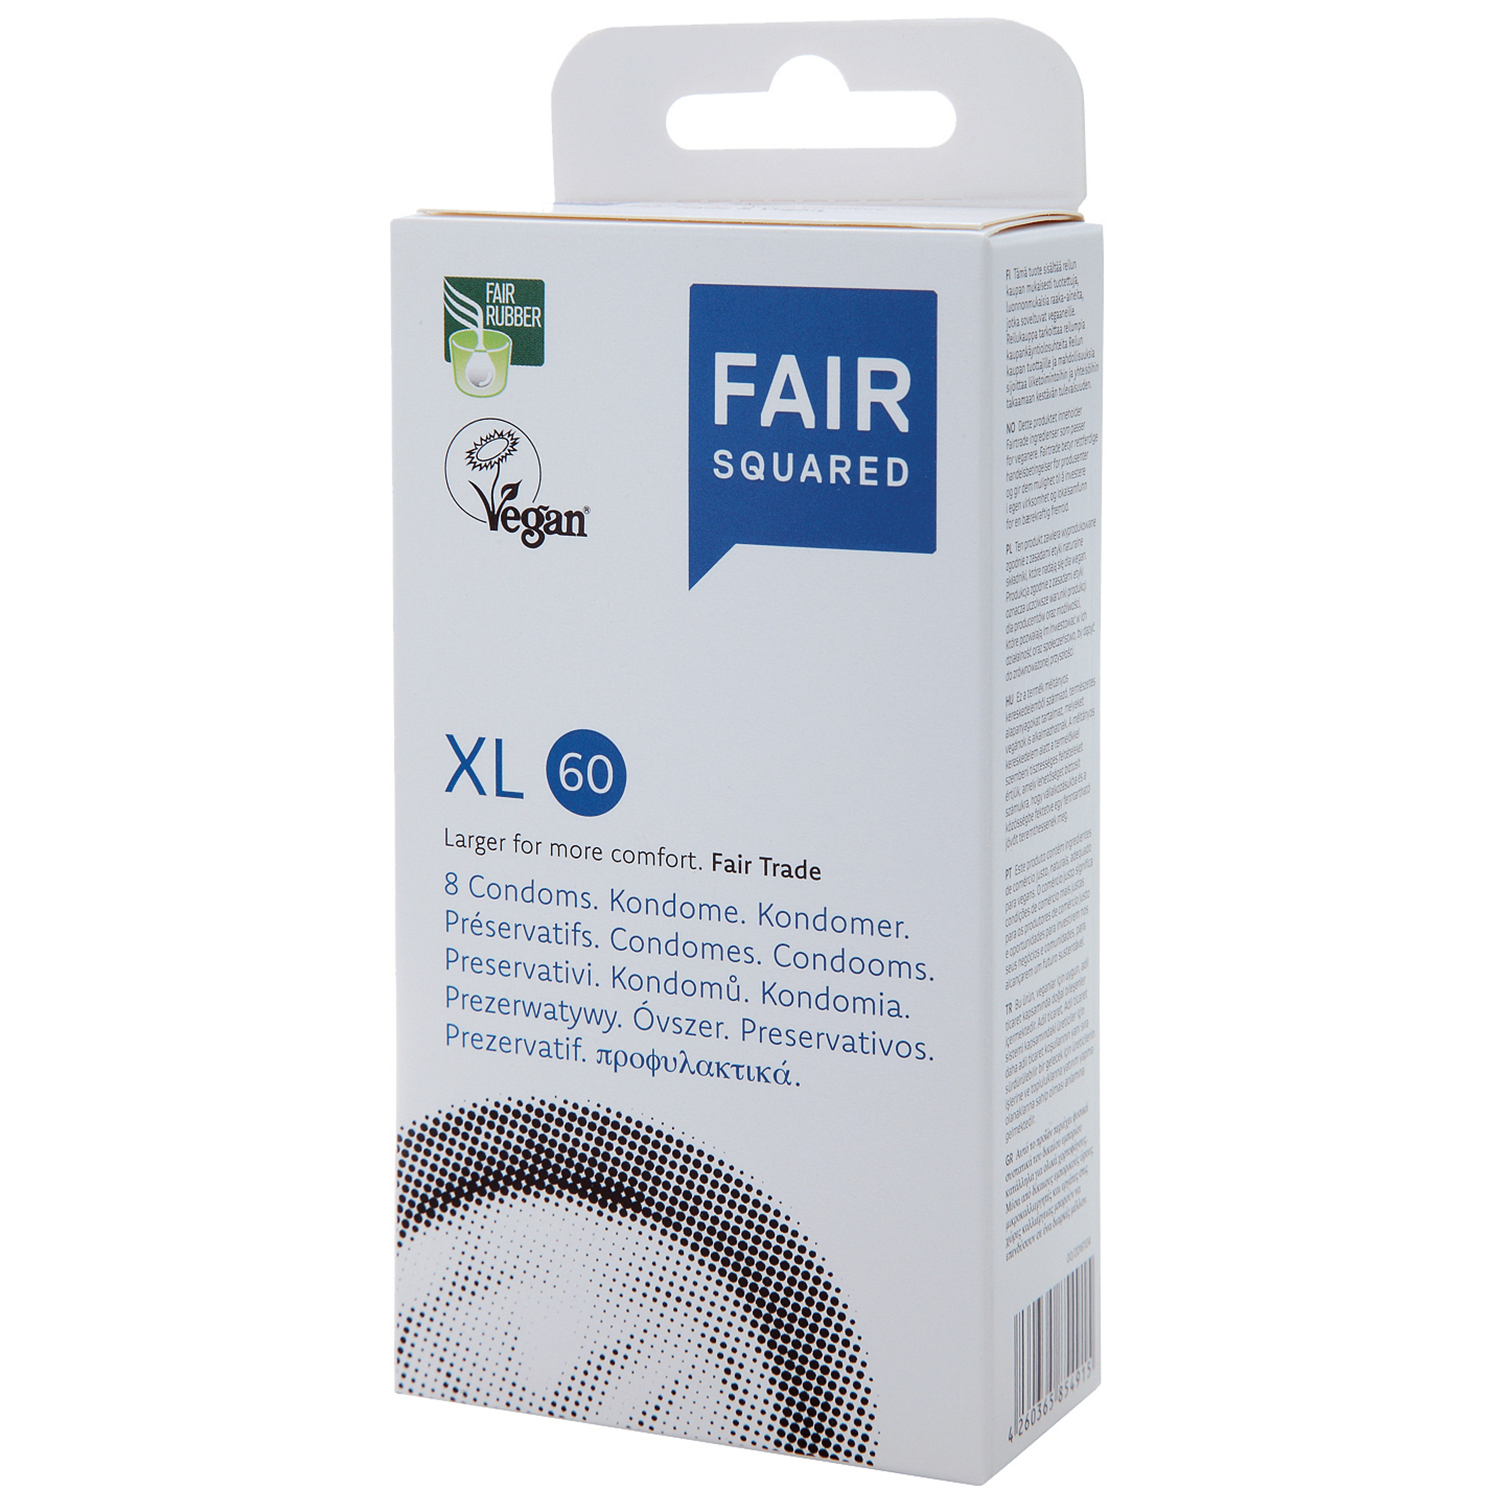 Fair Squared XL 60 Veganska Kondomer 8 st - Fair Squared